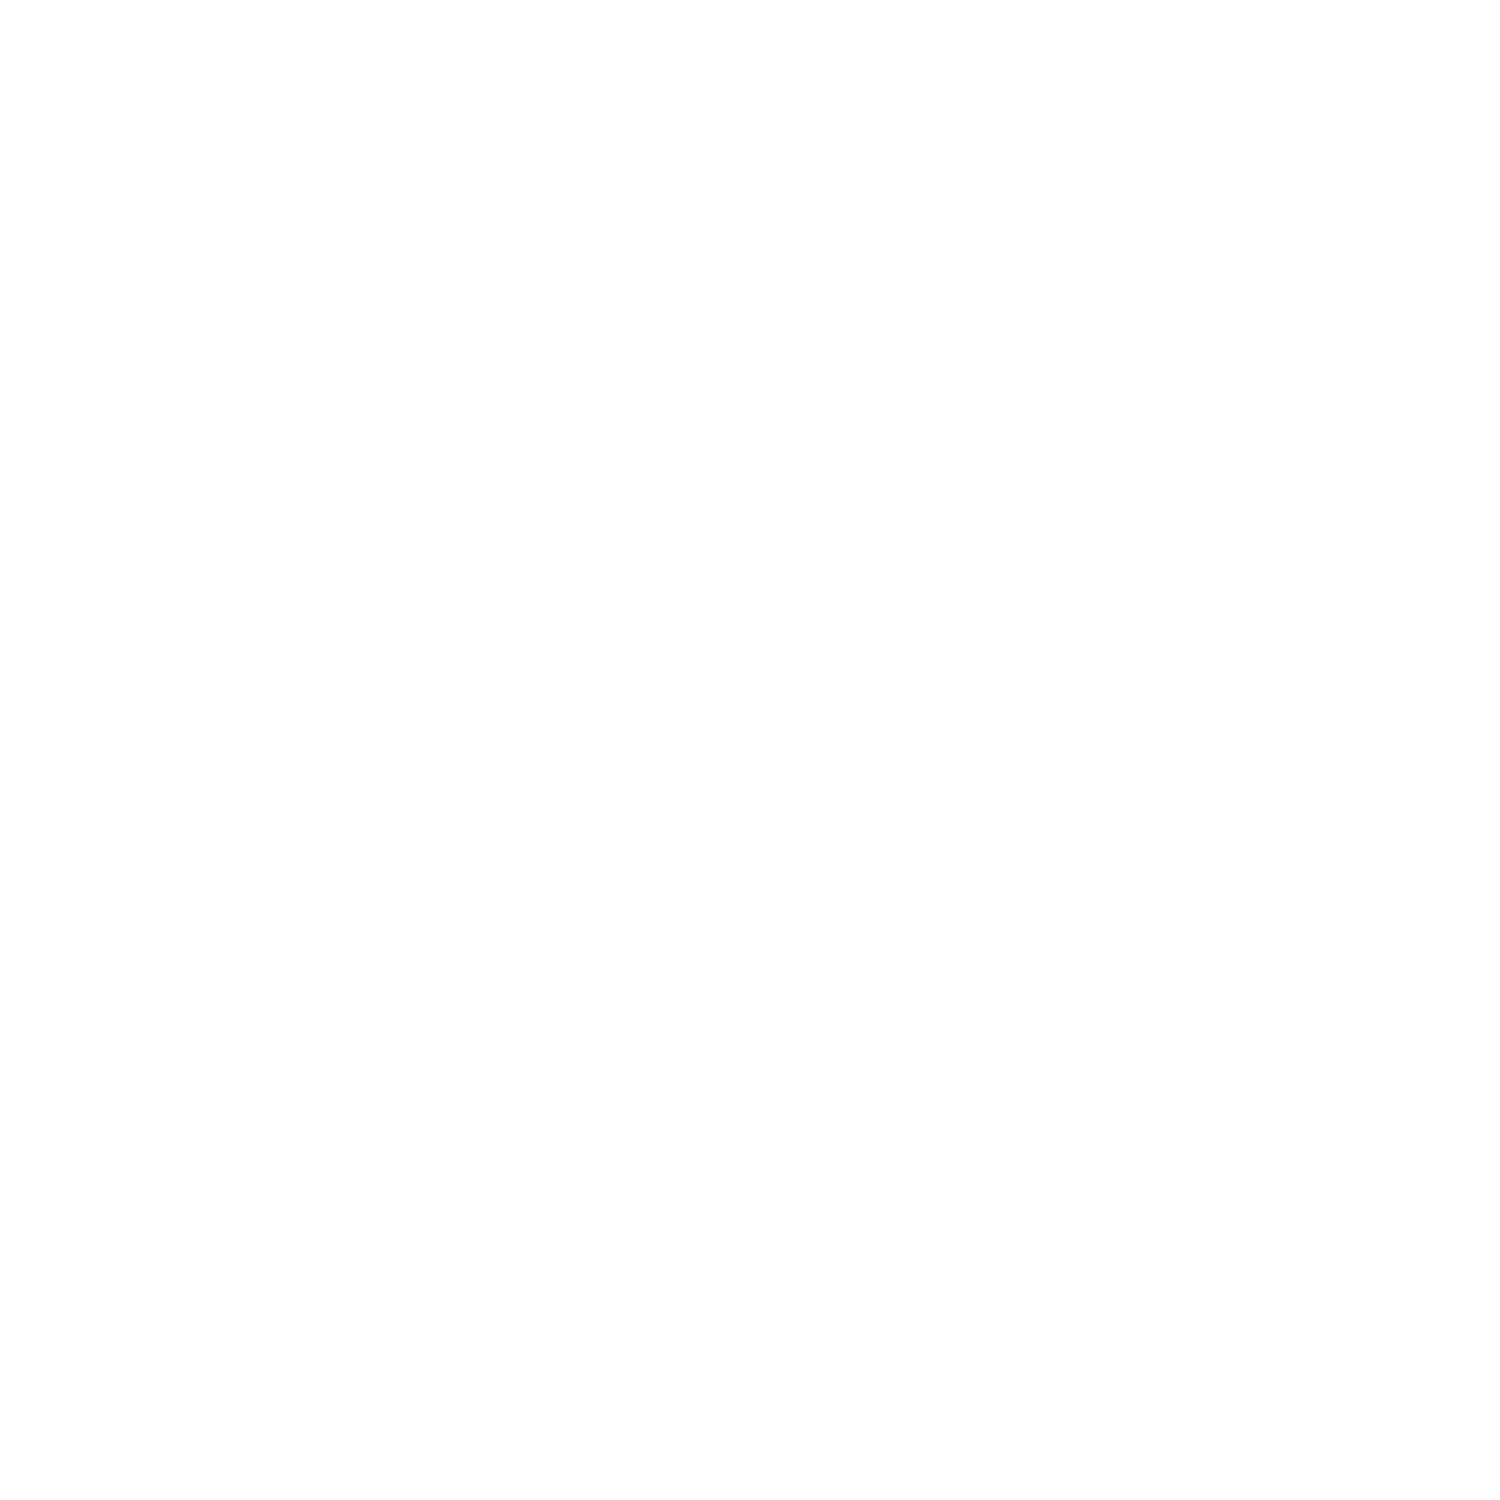 UP Market Media, Inc. | Full Servie Marketing Agency | Website Design | Statesboro, Ga